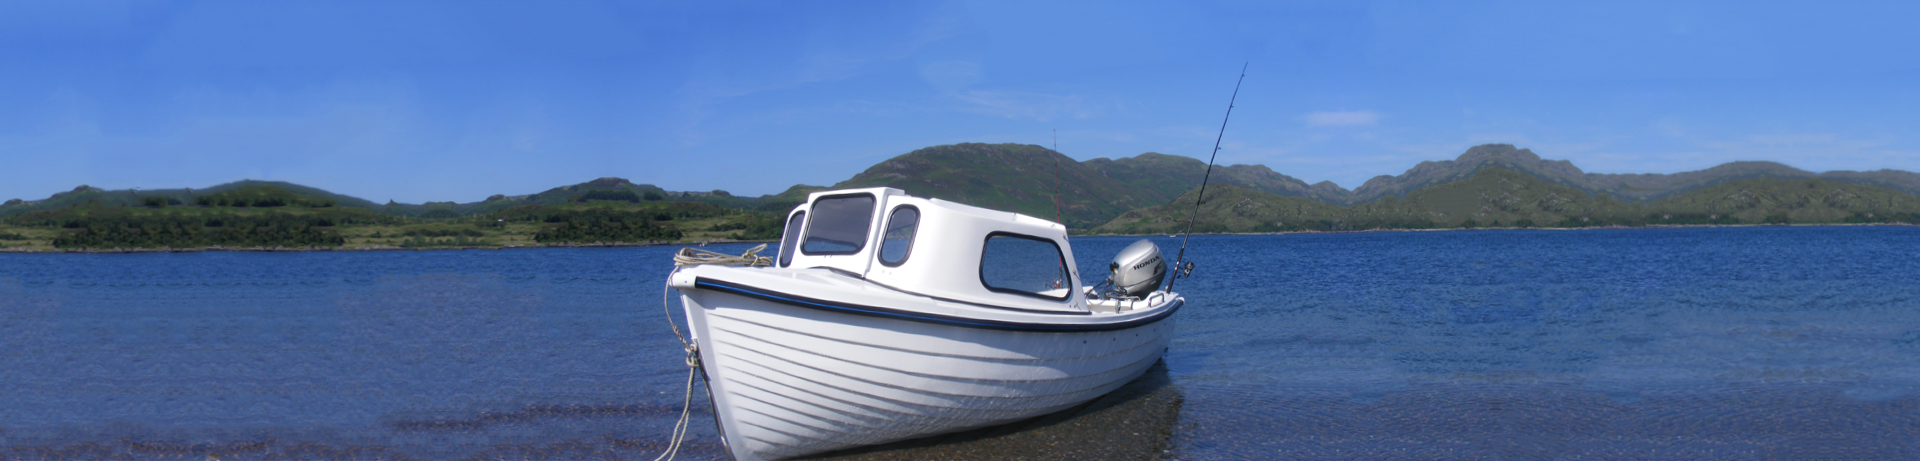 arran boat sales scotland